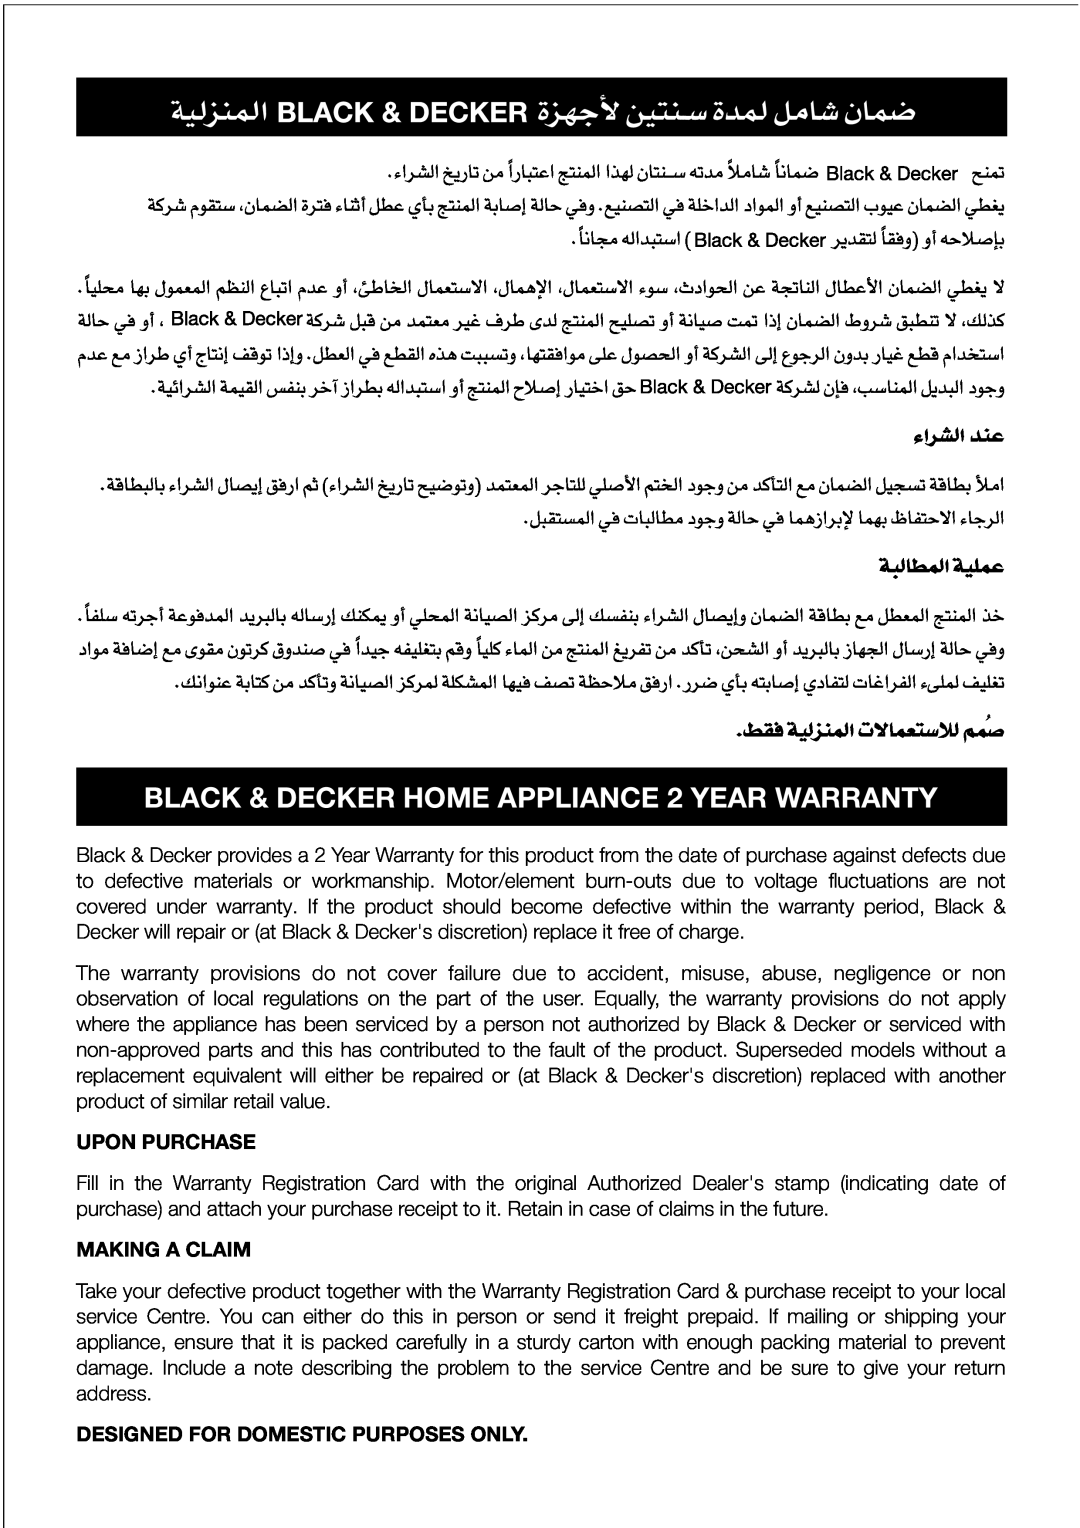 Black & Decker EF40 manual BLACK & DECKER HOME APPLIANCE 2 YEAR WARRANTY, Upon Purchase, Making A Claim 